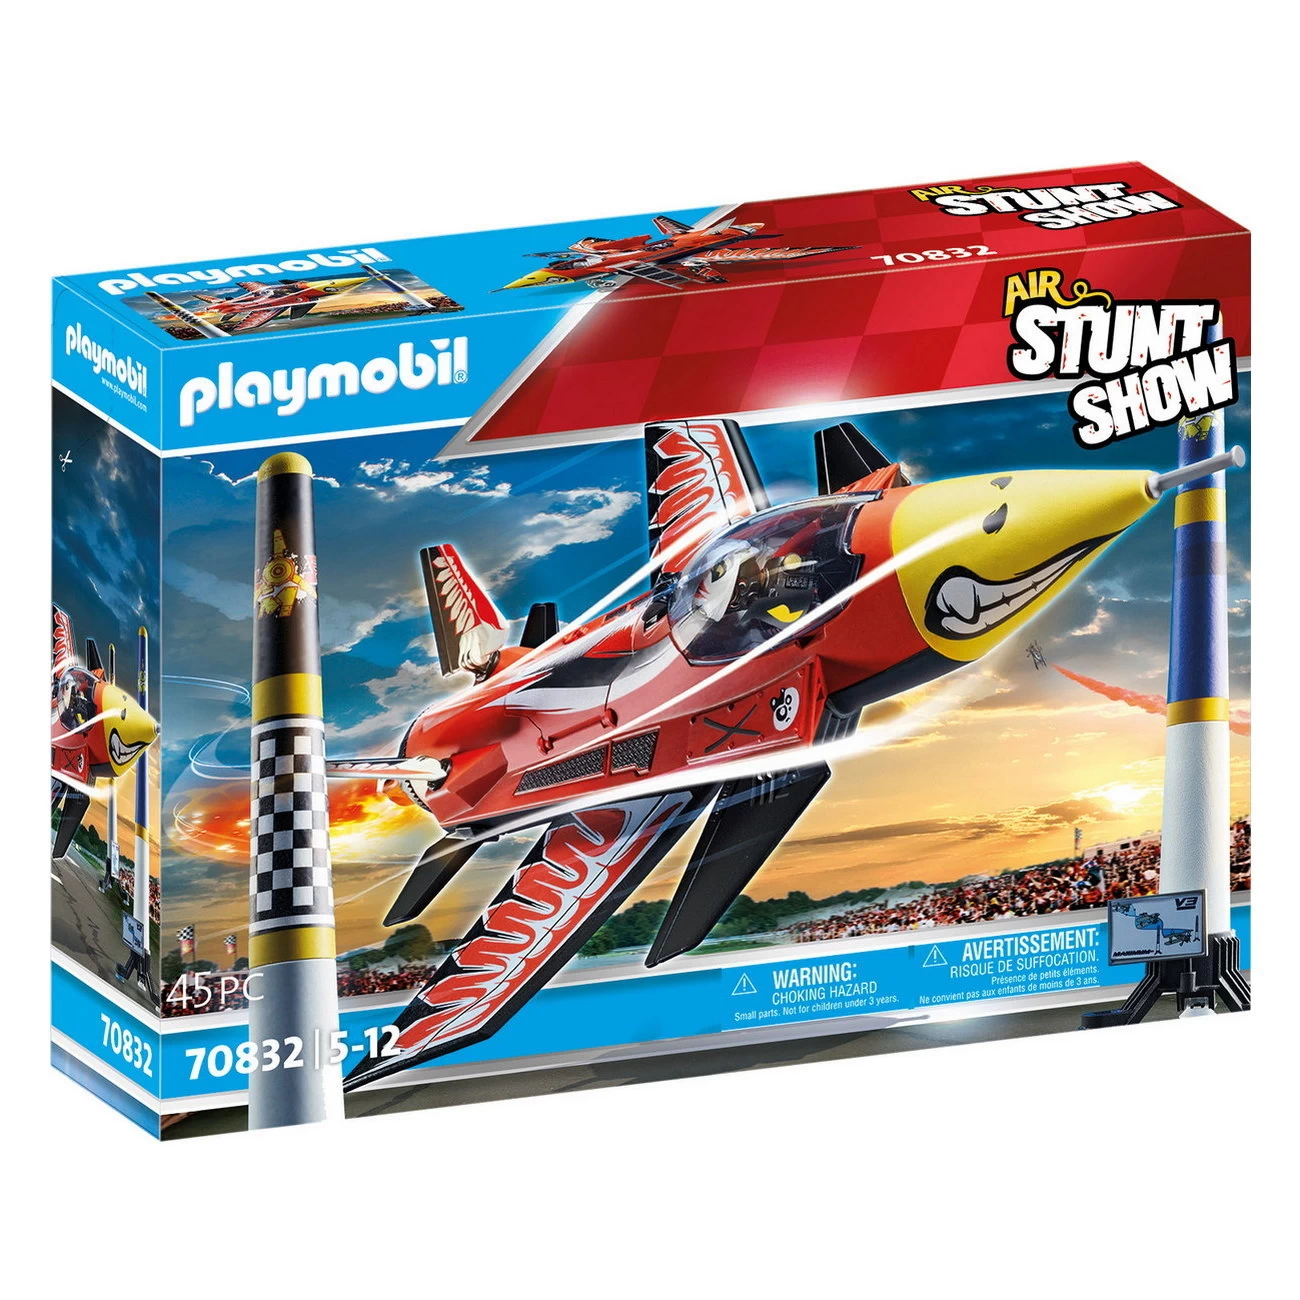 Playmobil 70832 - Düsenjet Eagle - Air Stuntshow